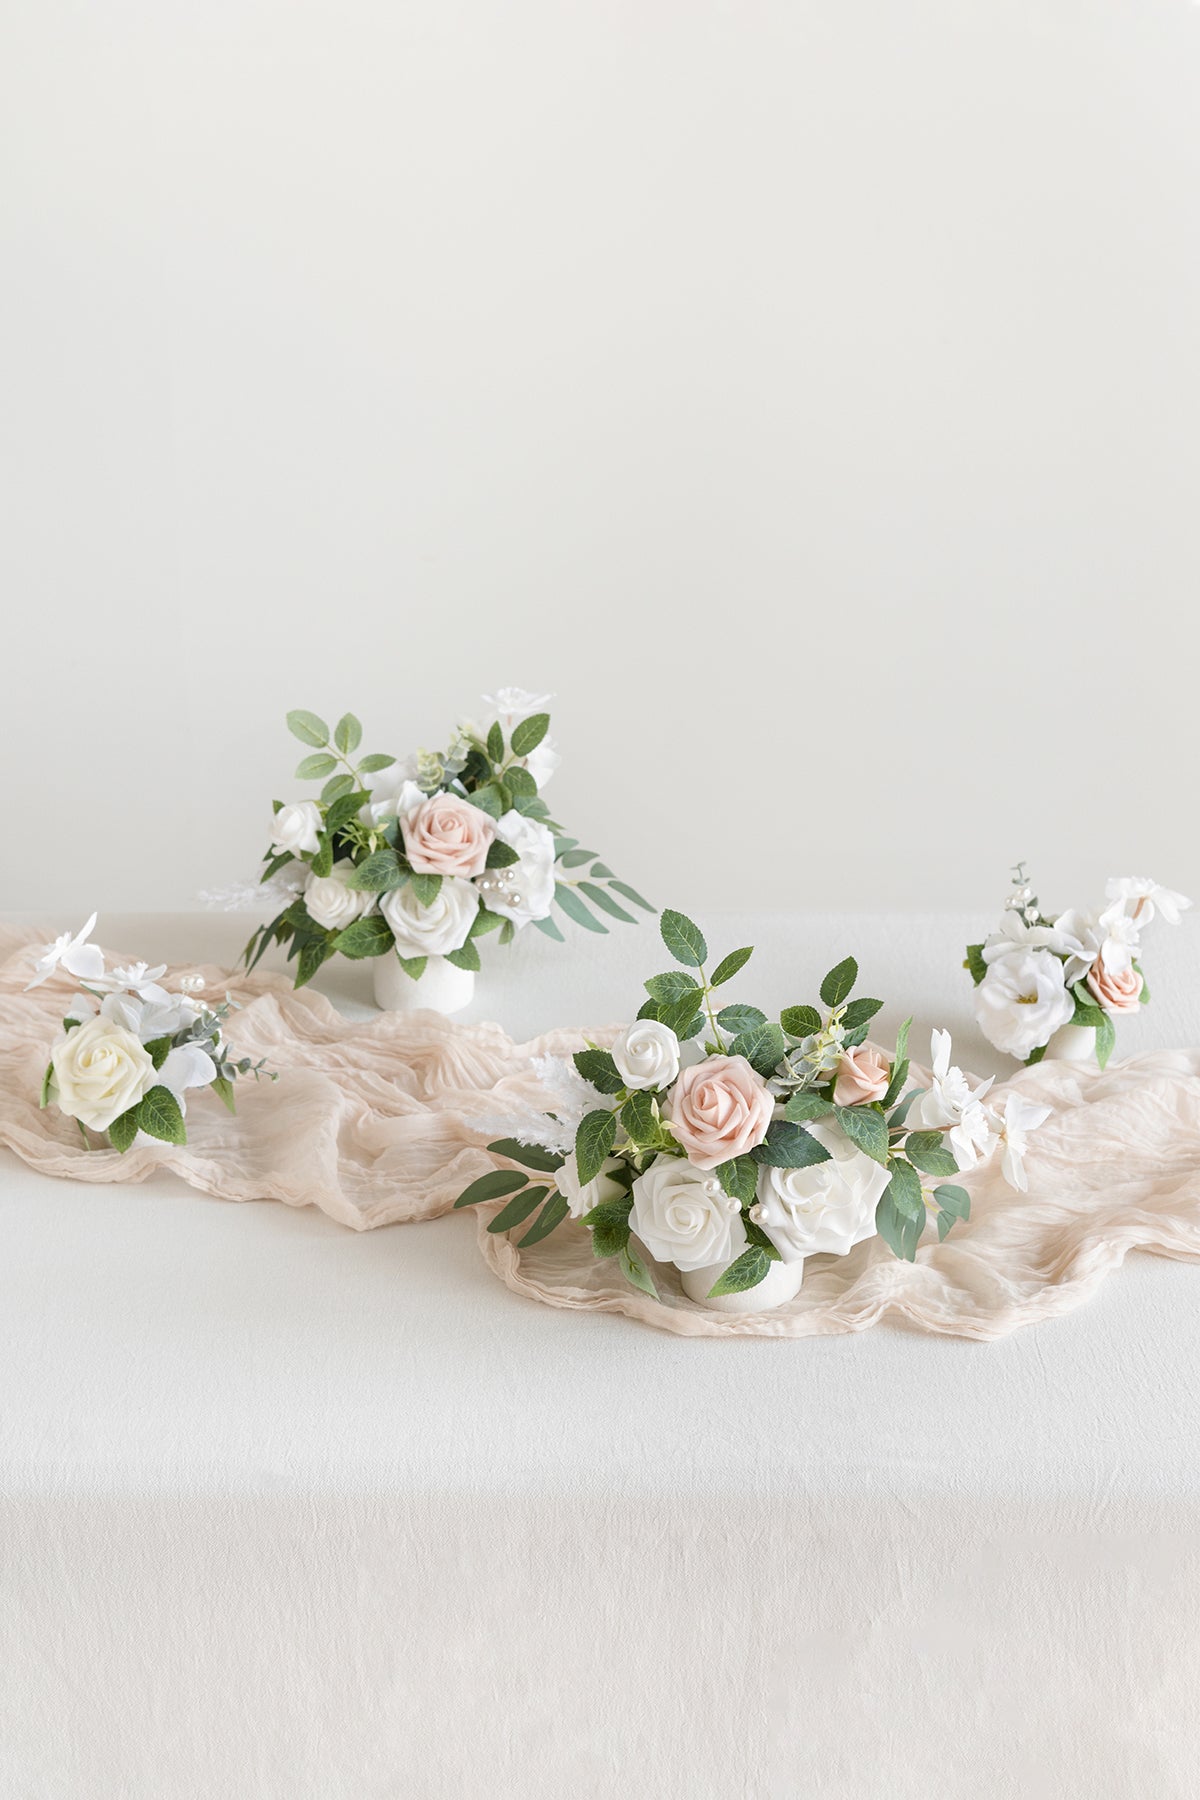 Assorted Floral Centerpiece Set in White & Sage